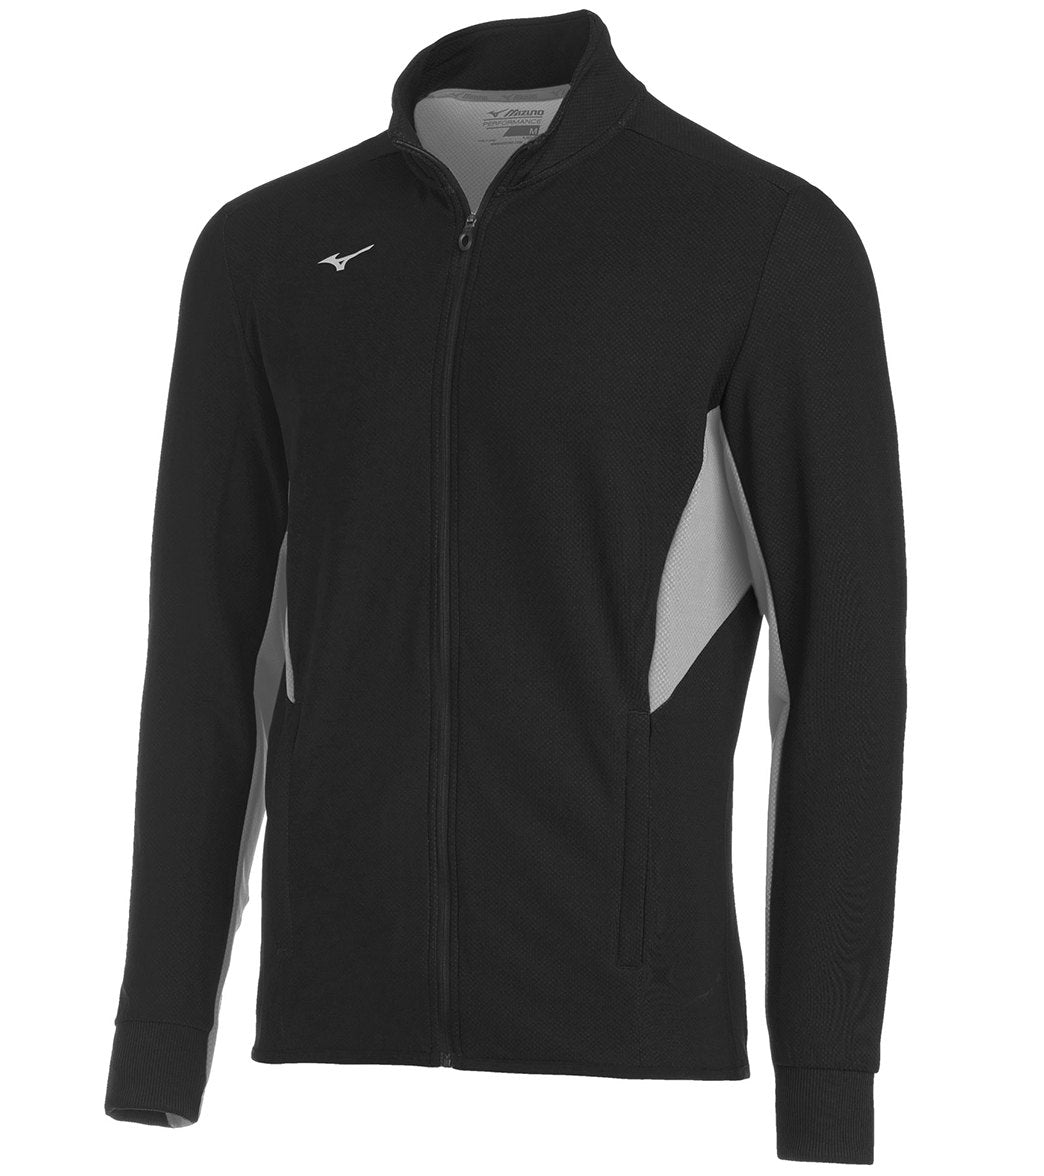 Mizuno Men's Elite Training Jacket - Black-Grey Large Black/Grey Cotton/Polyester - Swimoutlet.com